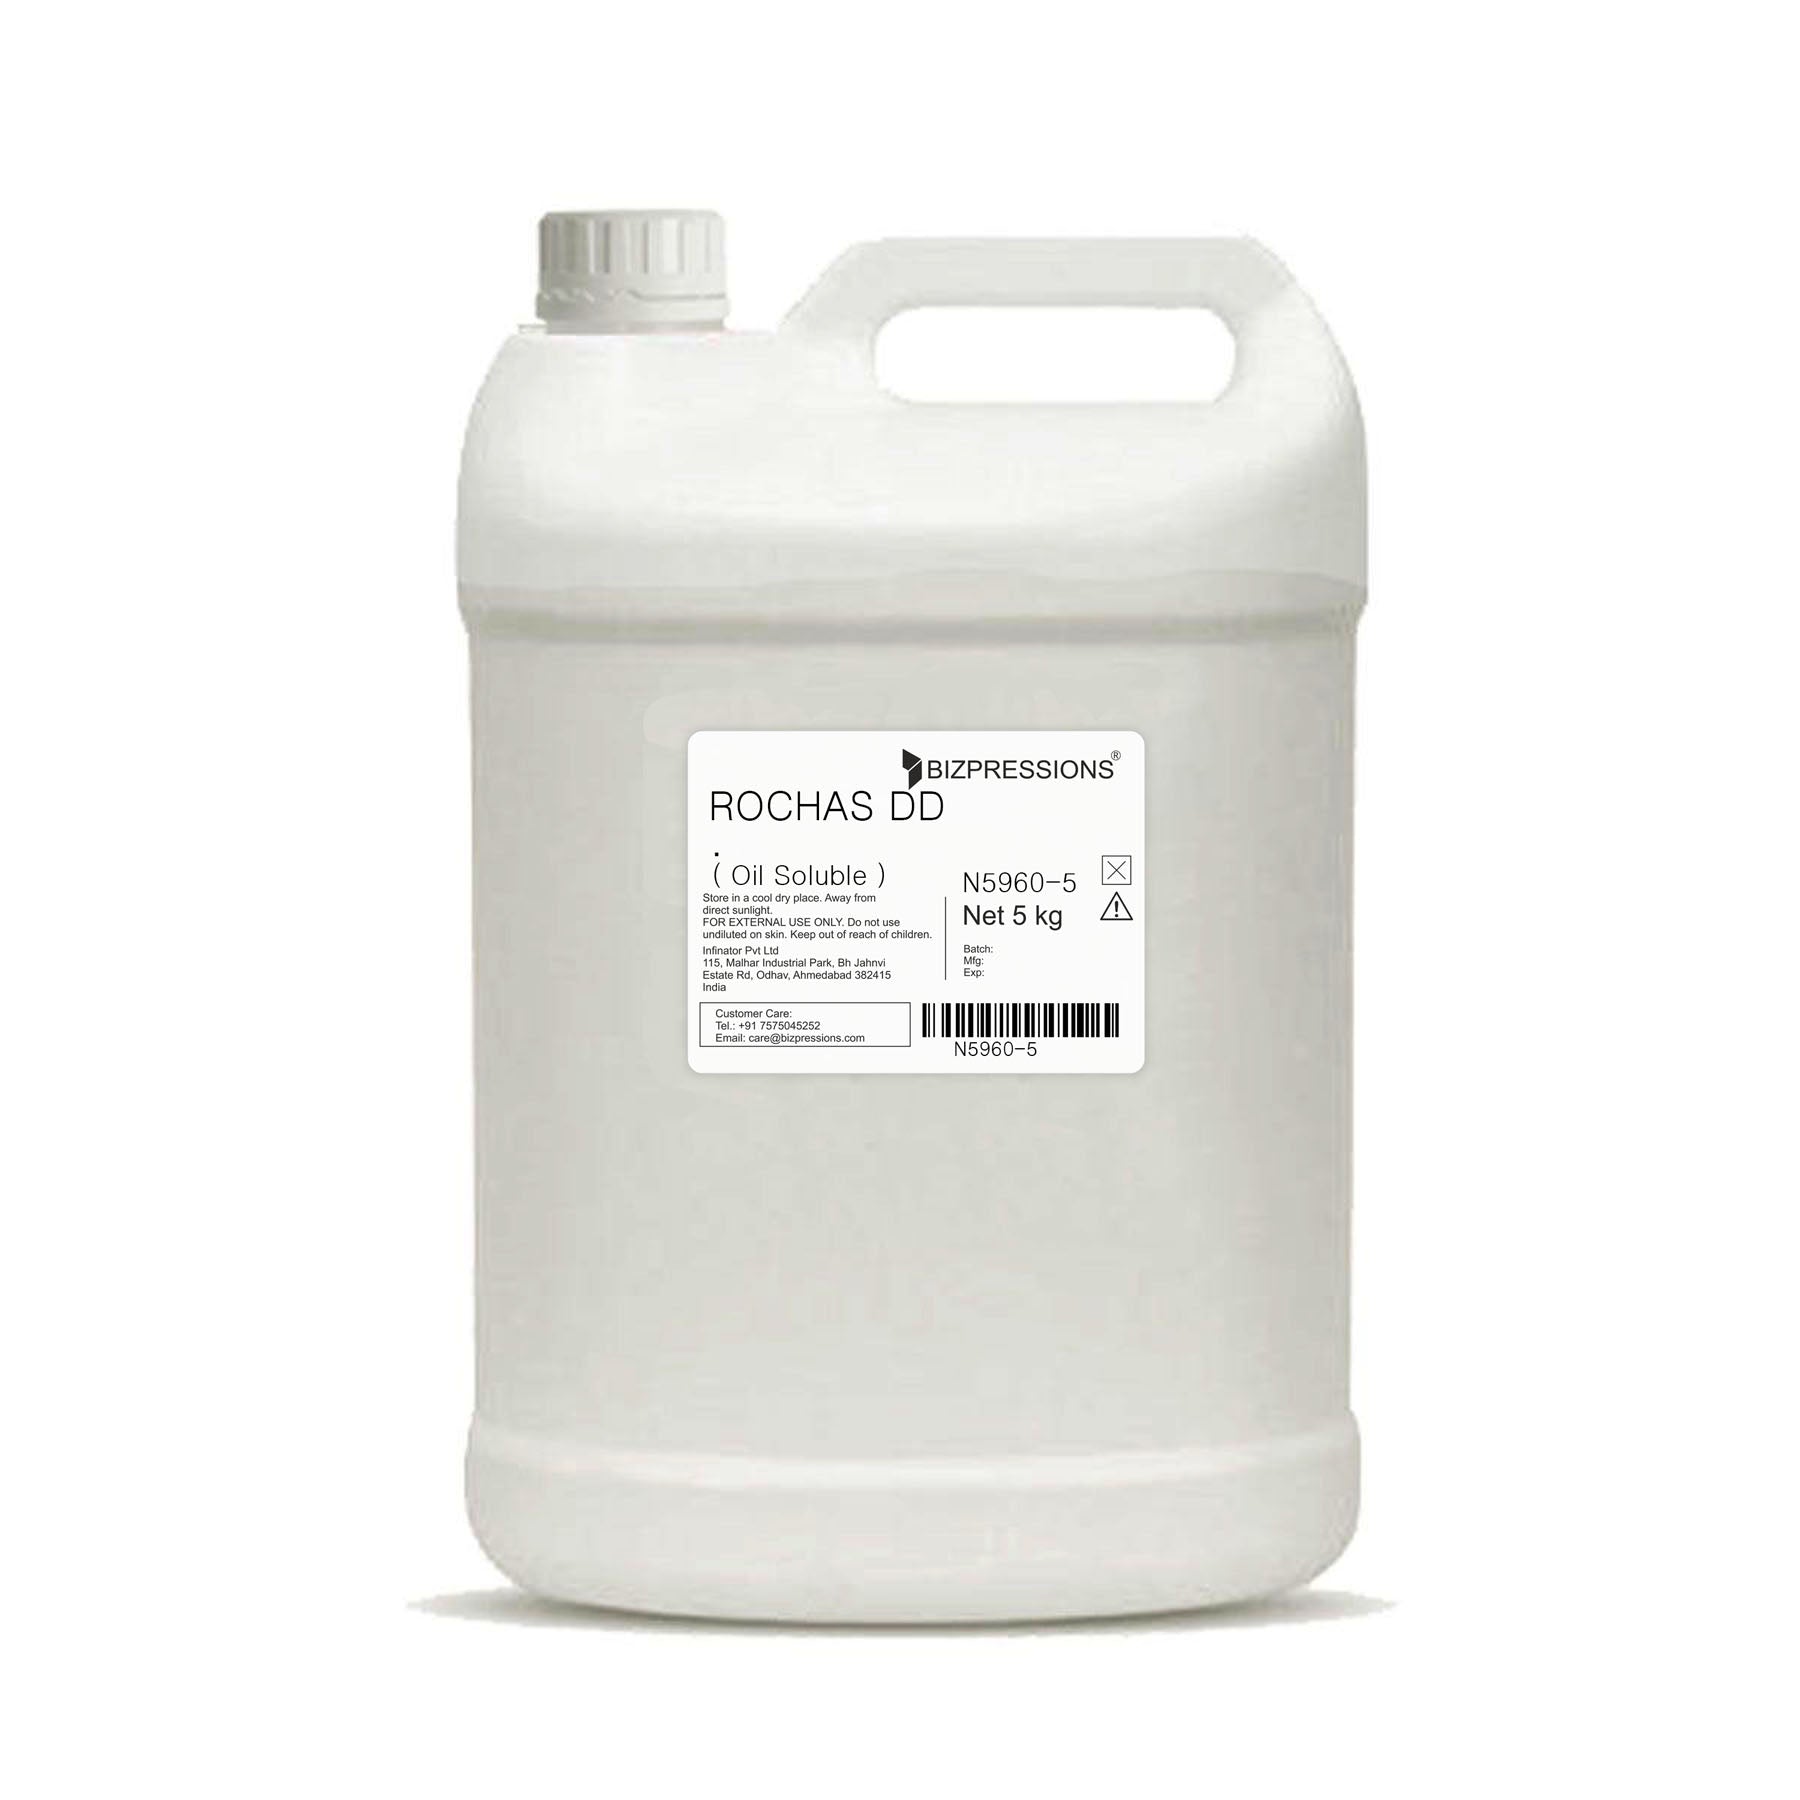 ROCHAS DD - Fragrance ( Oil Soluble ) - 5 kg